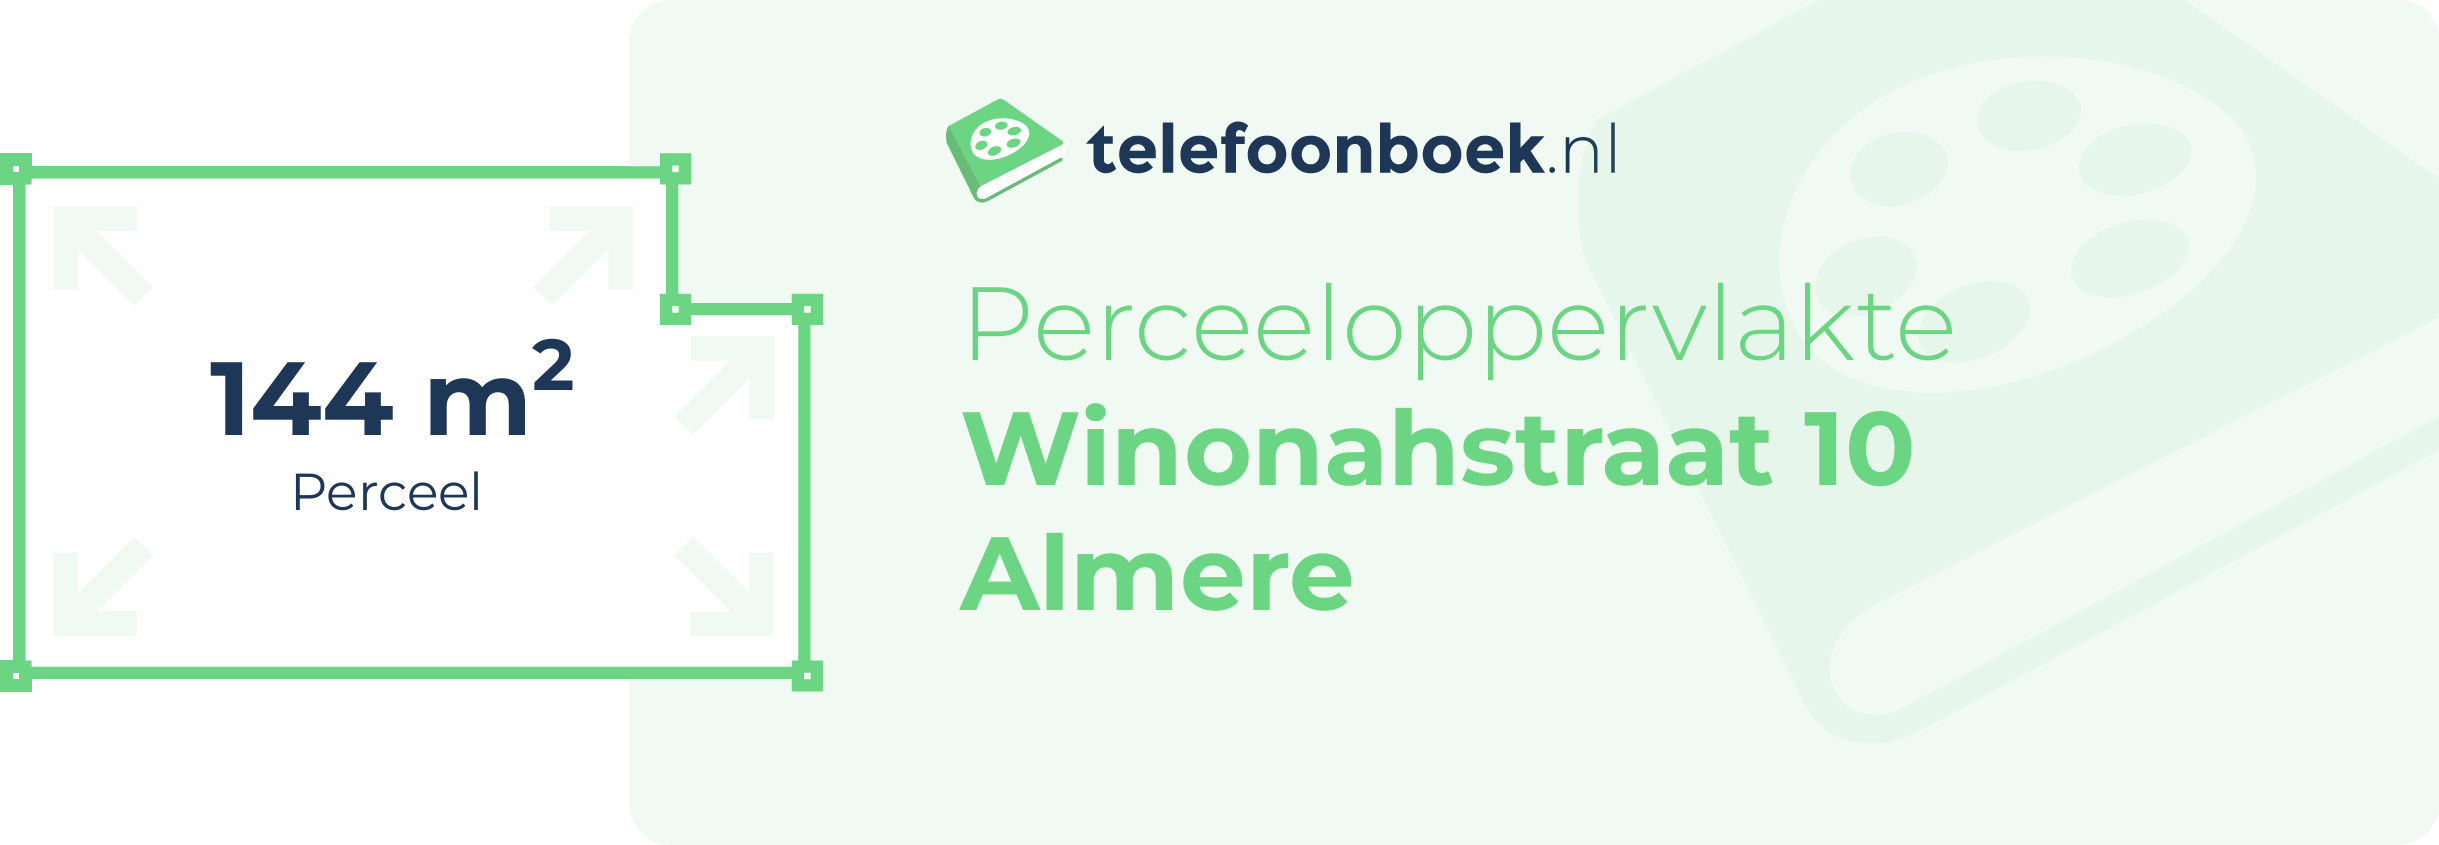 Perceeloppervlakte Winonahstraat 10 Almere